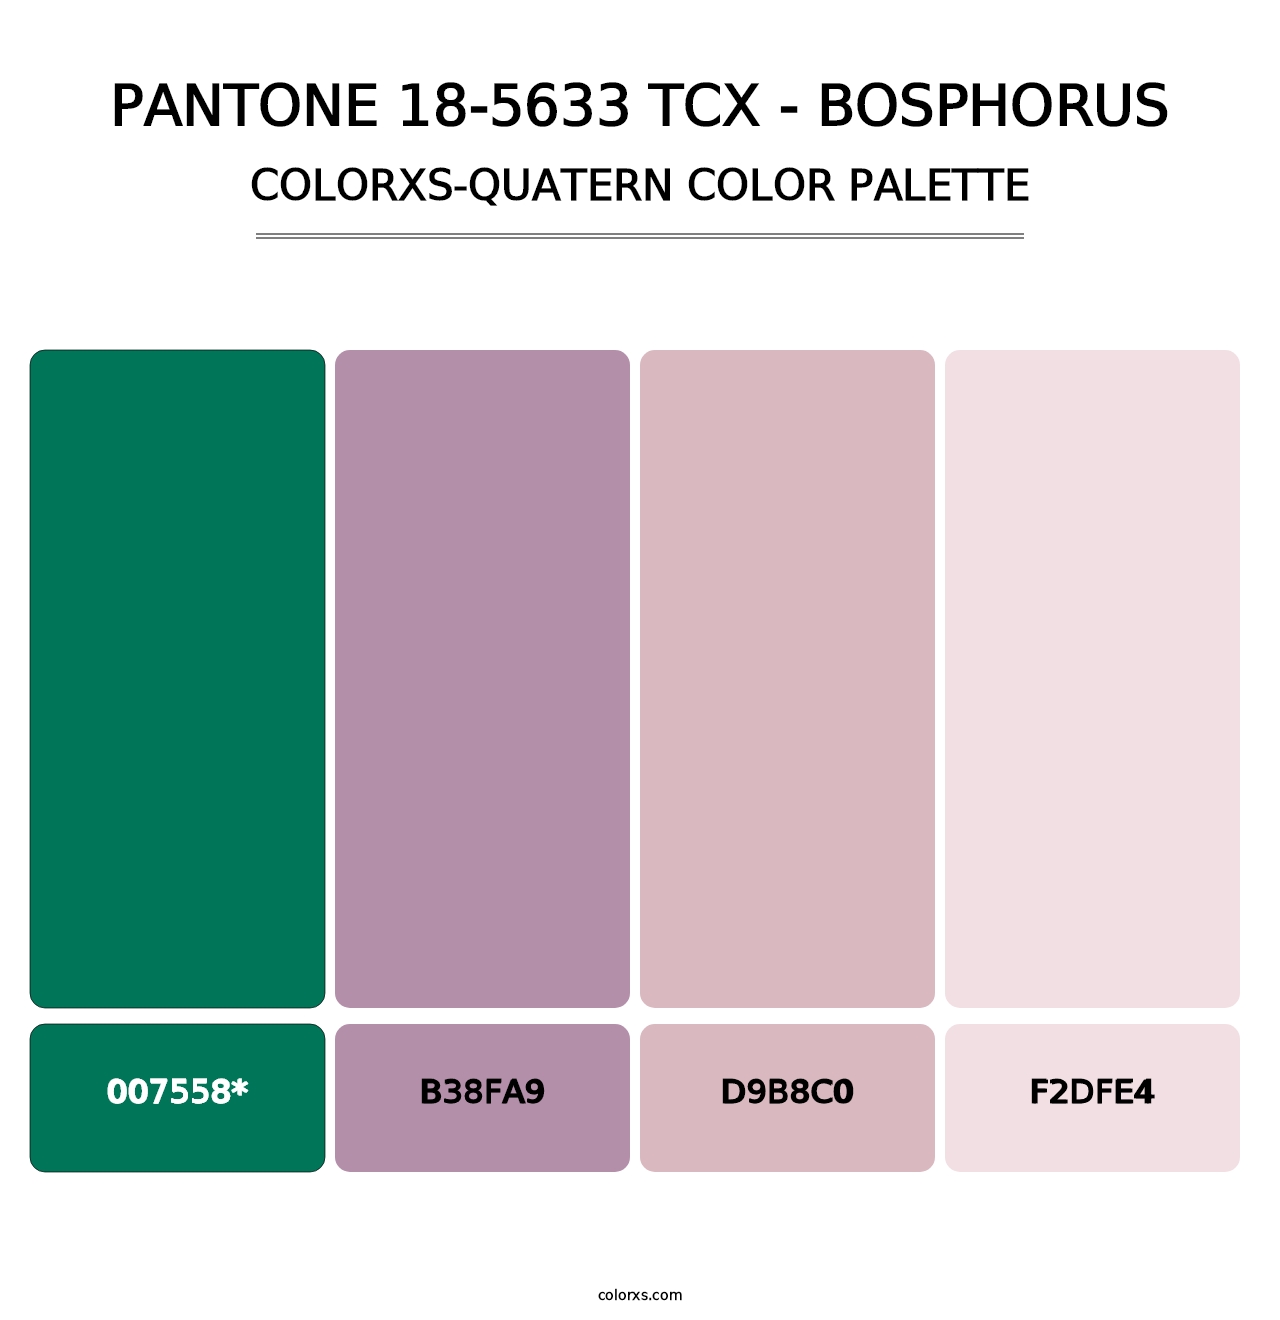 PANTONE 18-5633 TCX - Bosphorus - Colorxs Quatern Palette